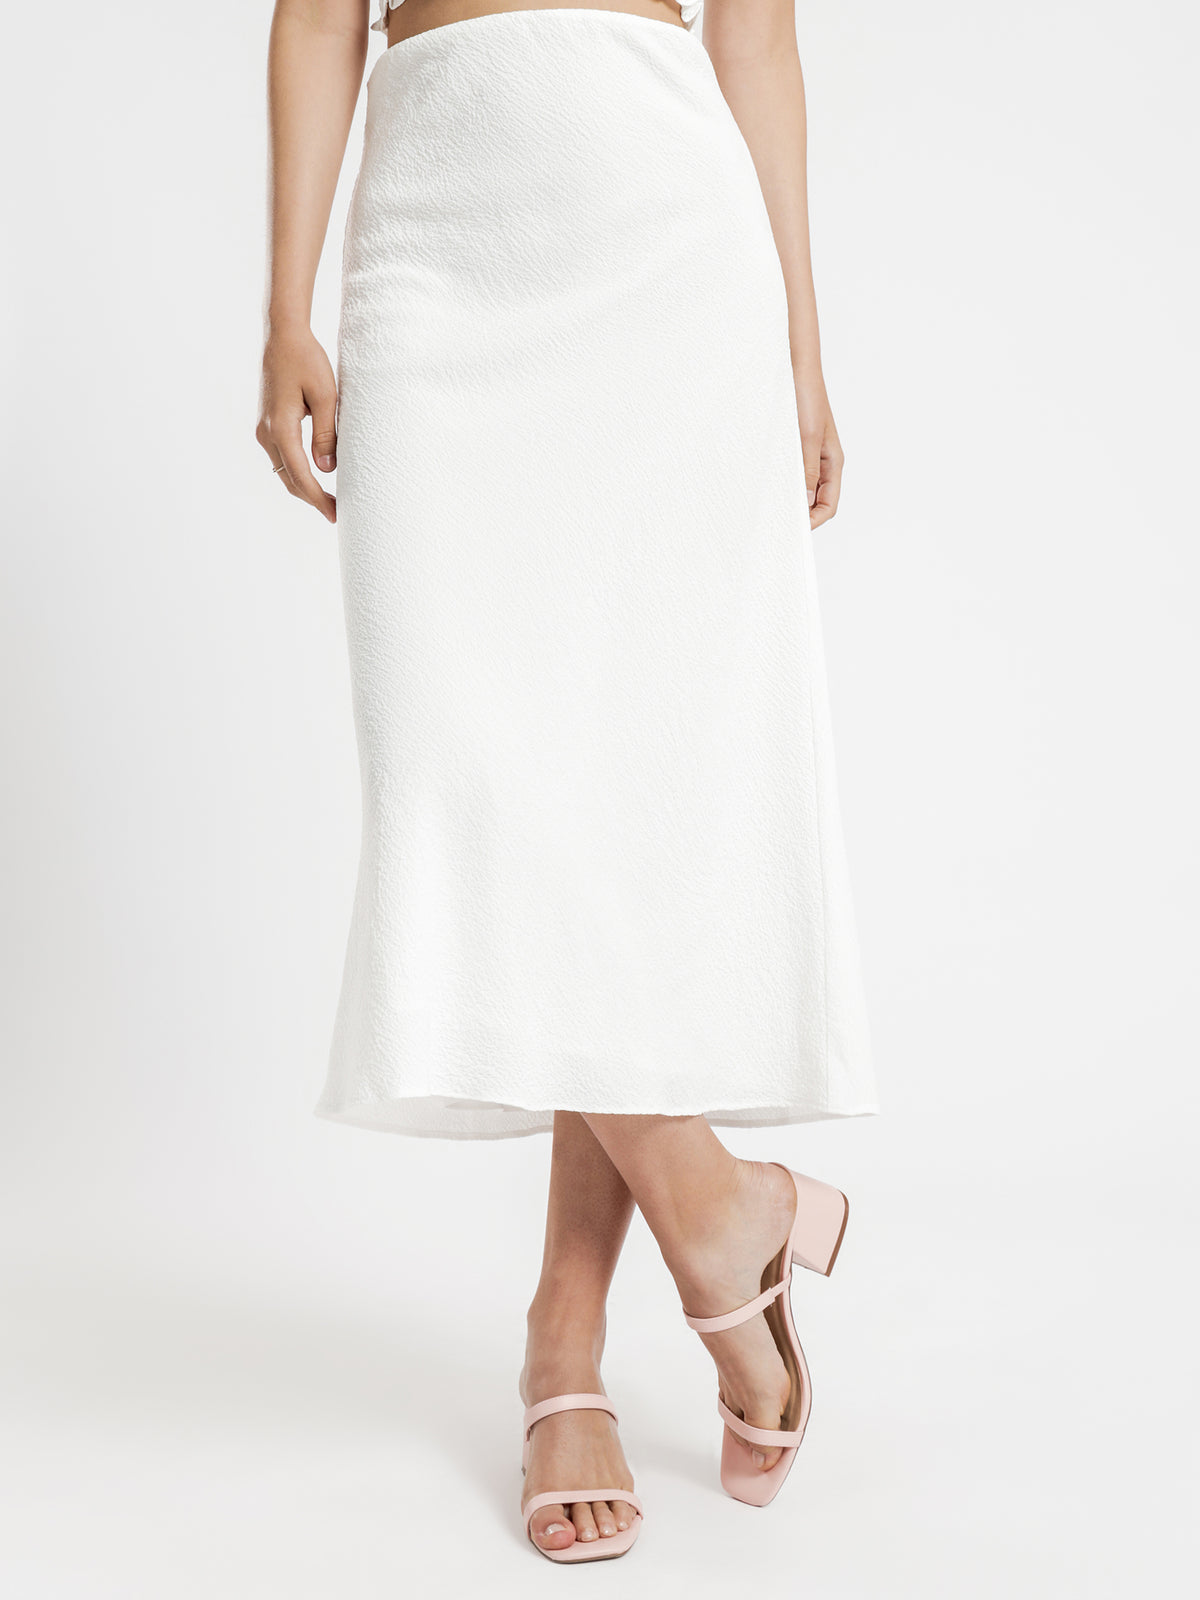 Tia Crinkle Skirt in White